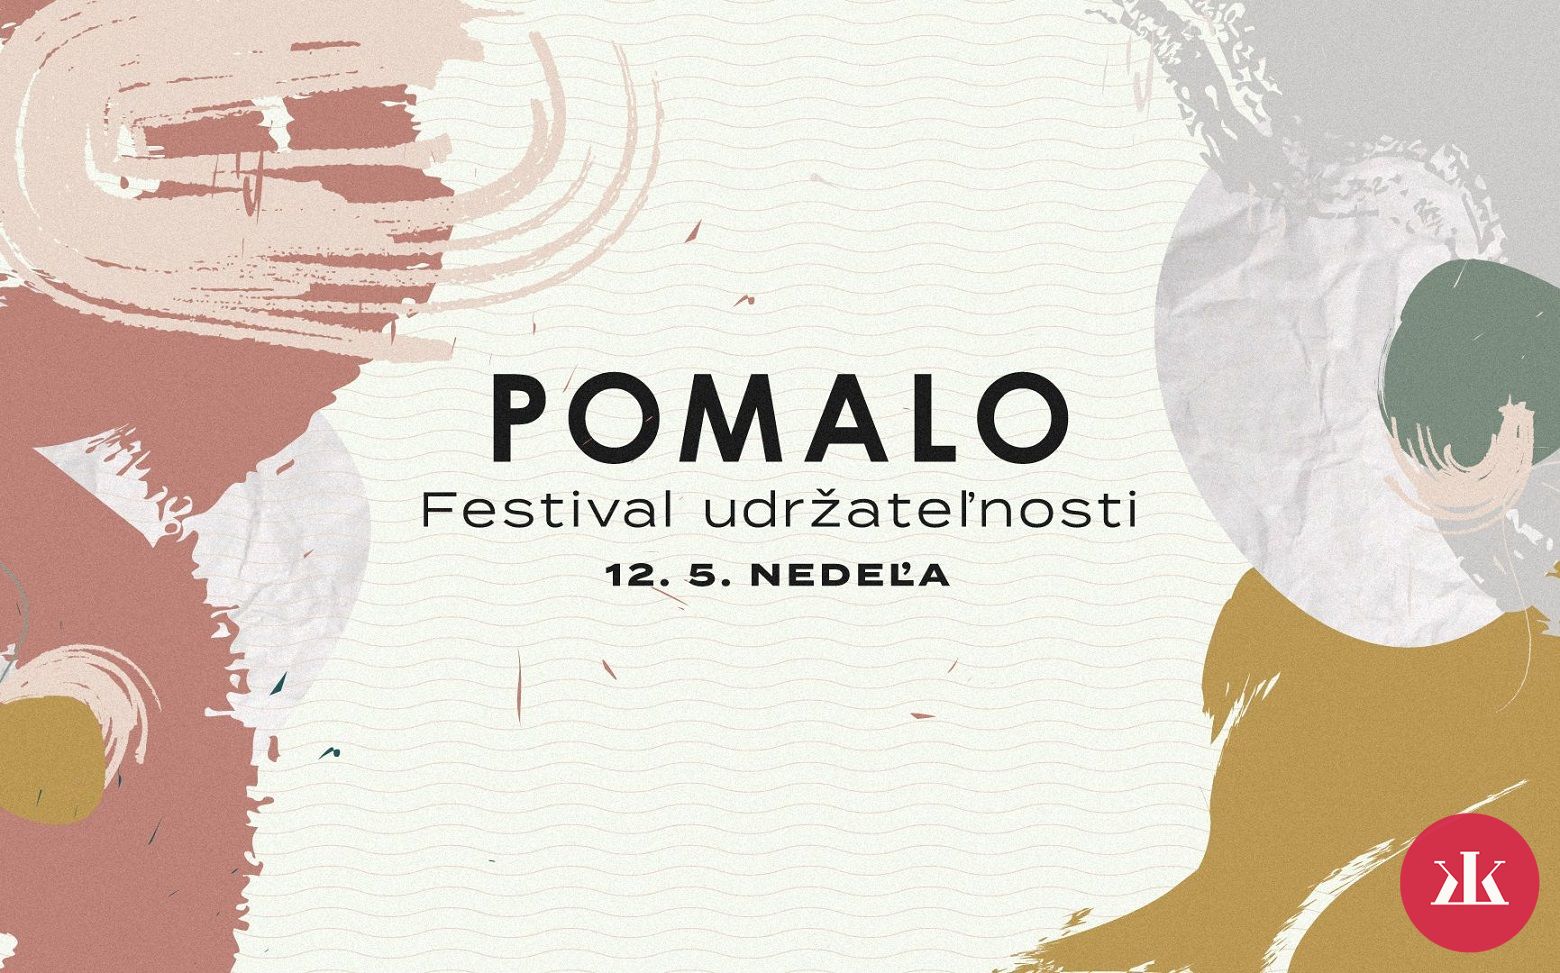 POMALO festival